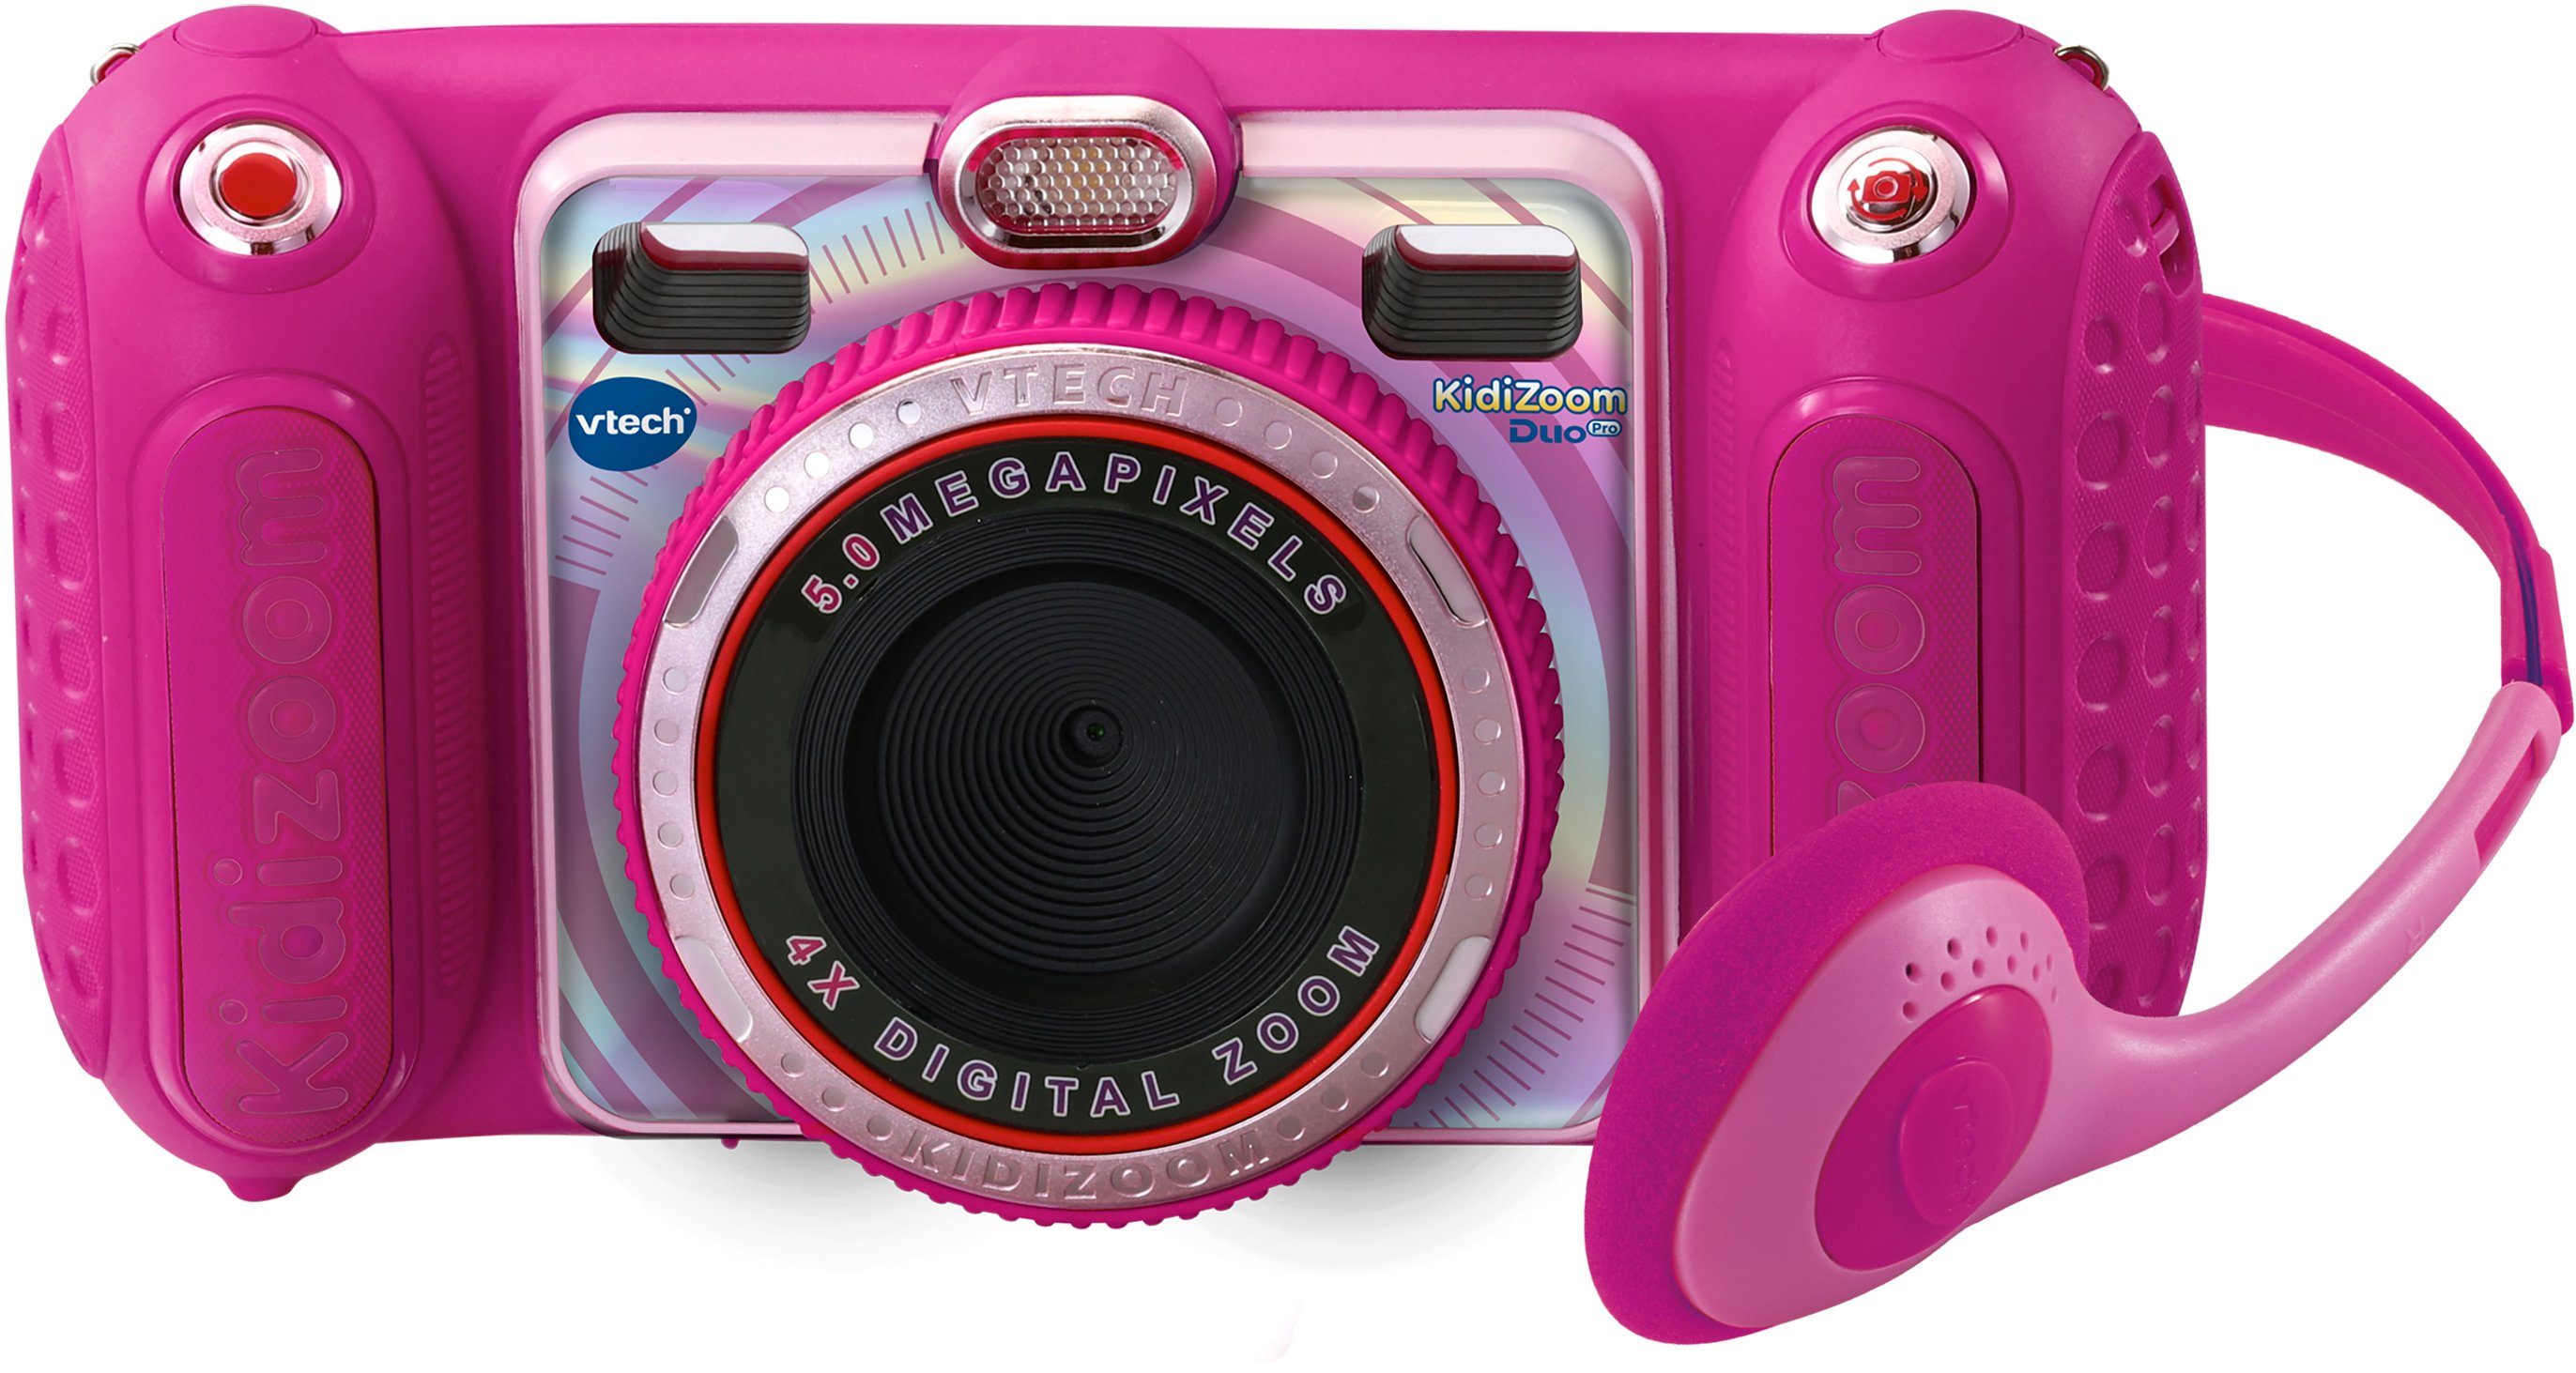 Vtech® KidiZoom Duo Pro Kinderkamera (inkluisve Kopfhörer) pink | Spielzeug-Kameras